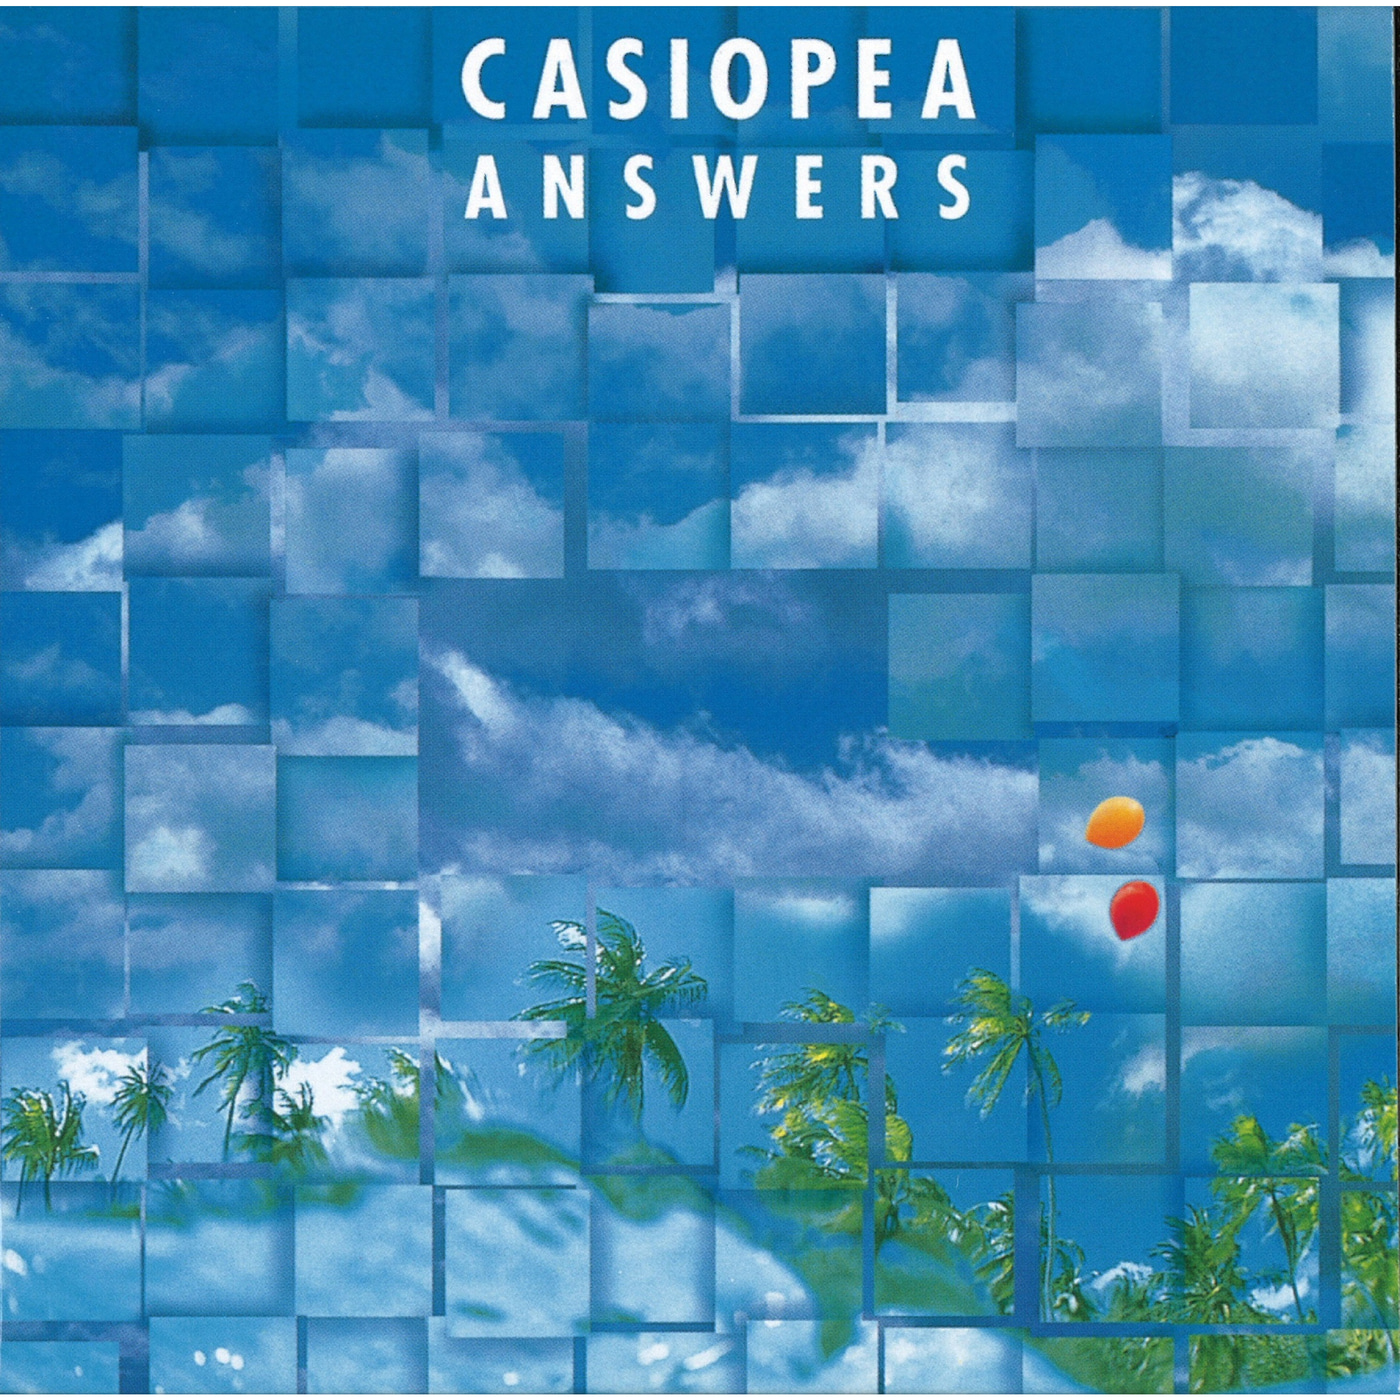 Casiopea-Previous Matters